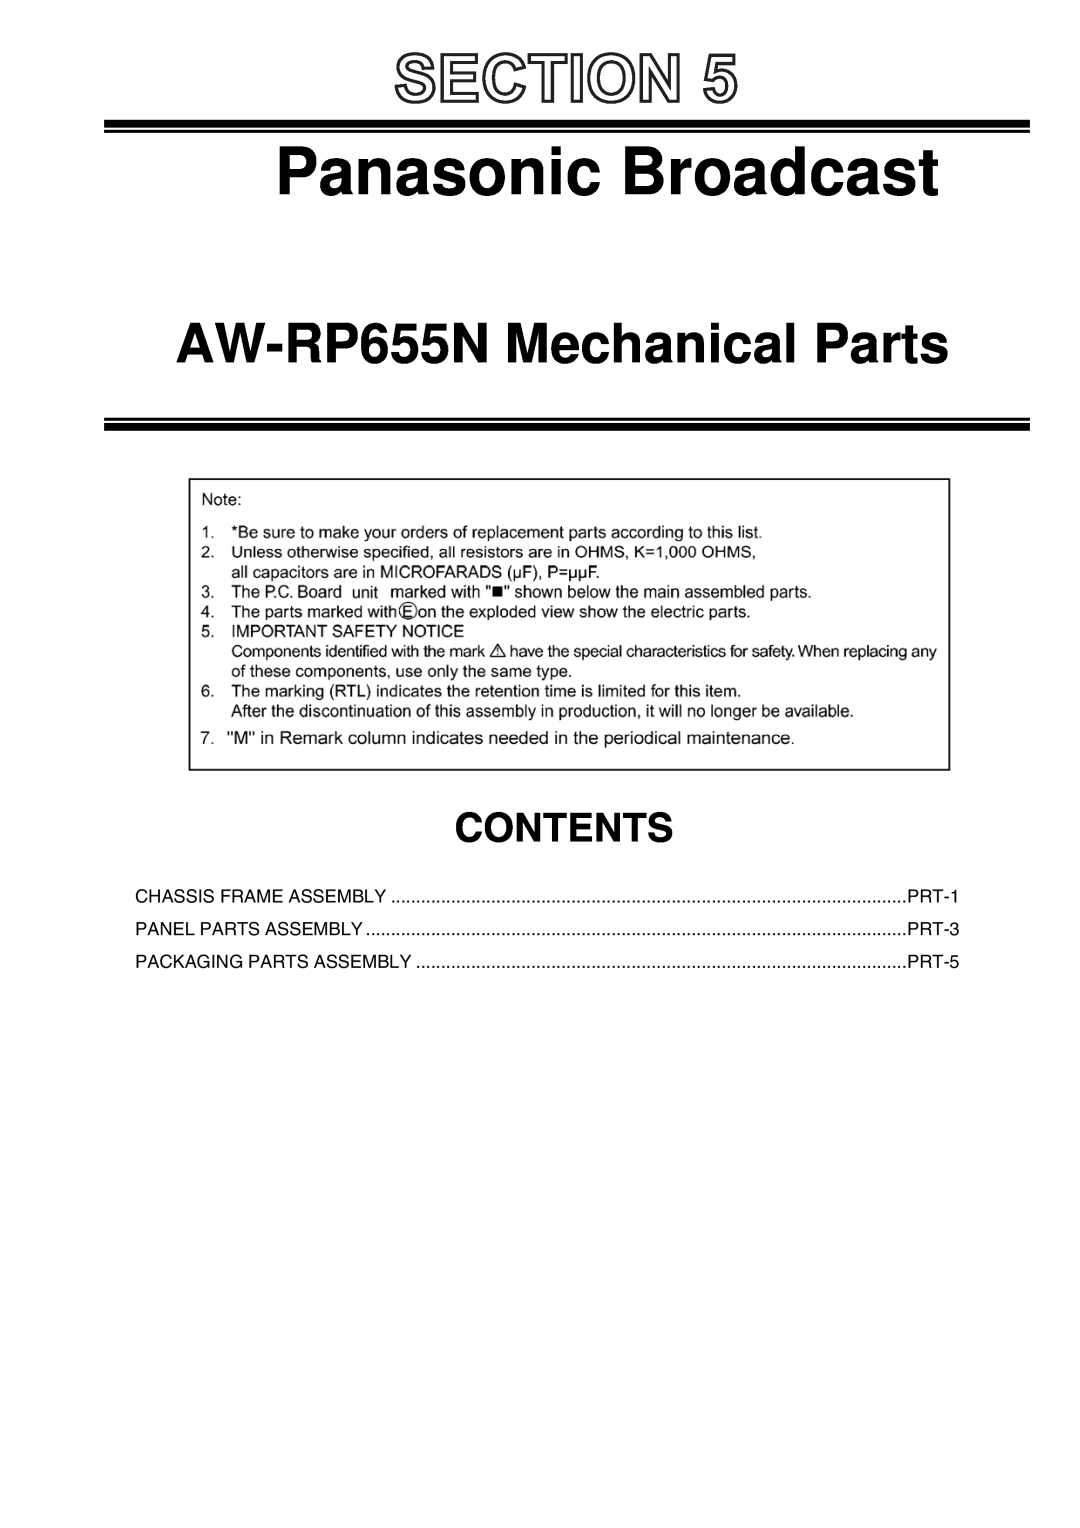 Panasonic manual PRT-1, PRT-3, PRT-5, Panasonic Broadcast, AW-RP655NMechanical Parts, Contents, Chassis Frame Assembly 